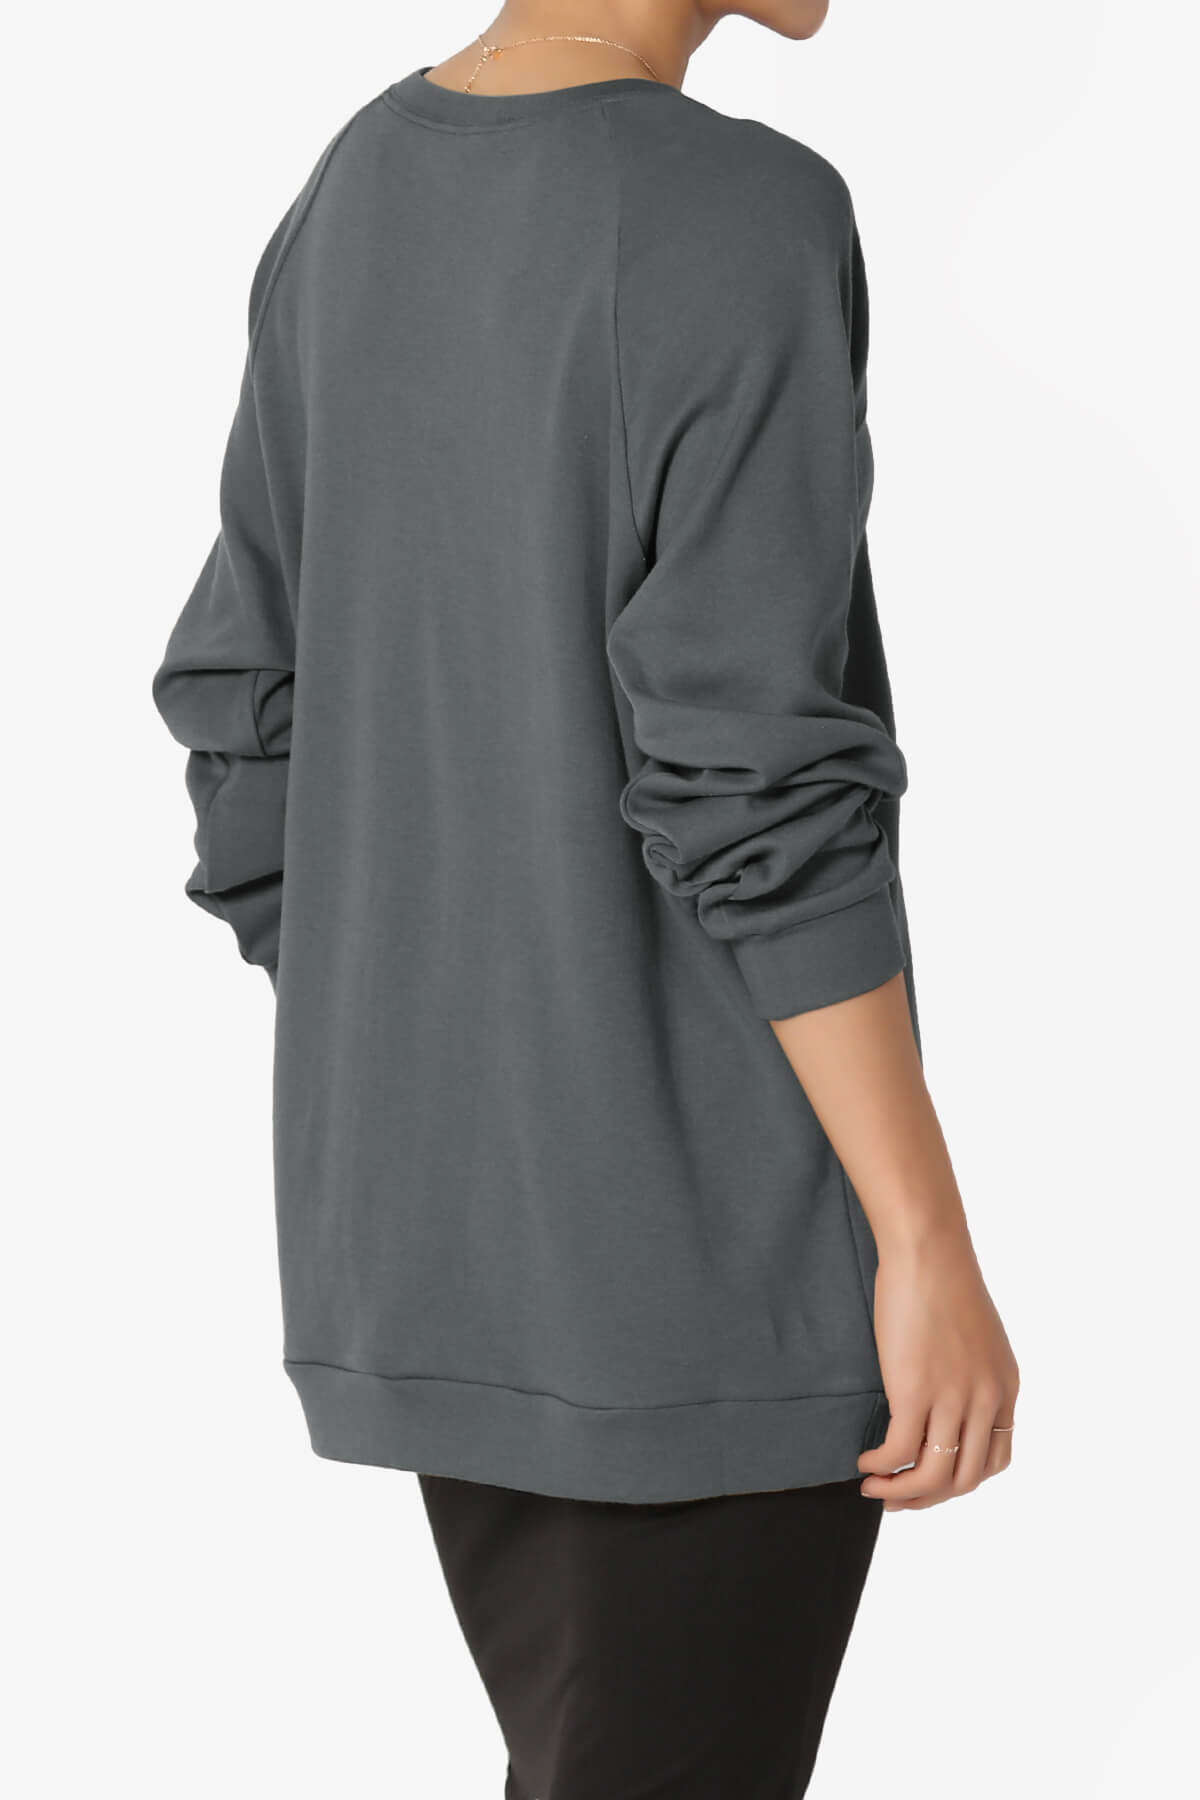 Carlene Cotton Raglan Sleeve Pullover Top ASH GREY_4